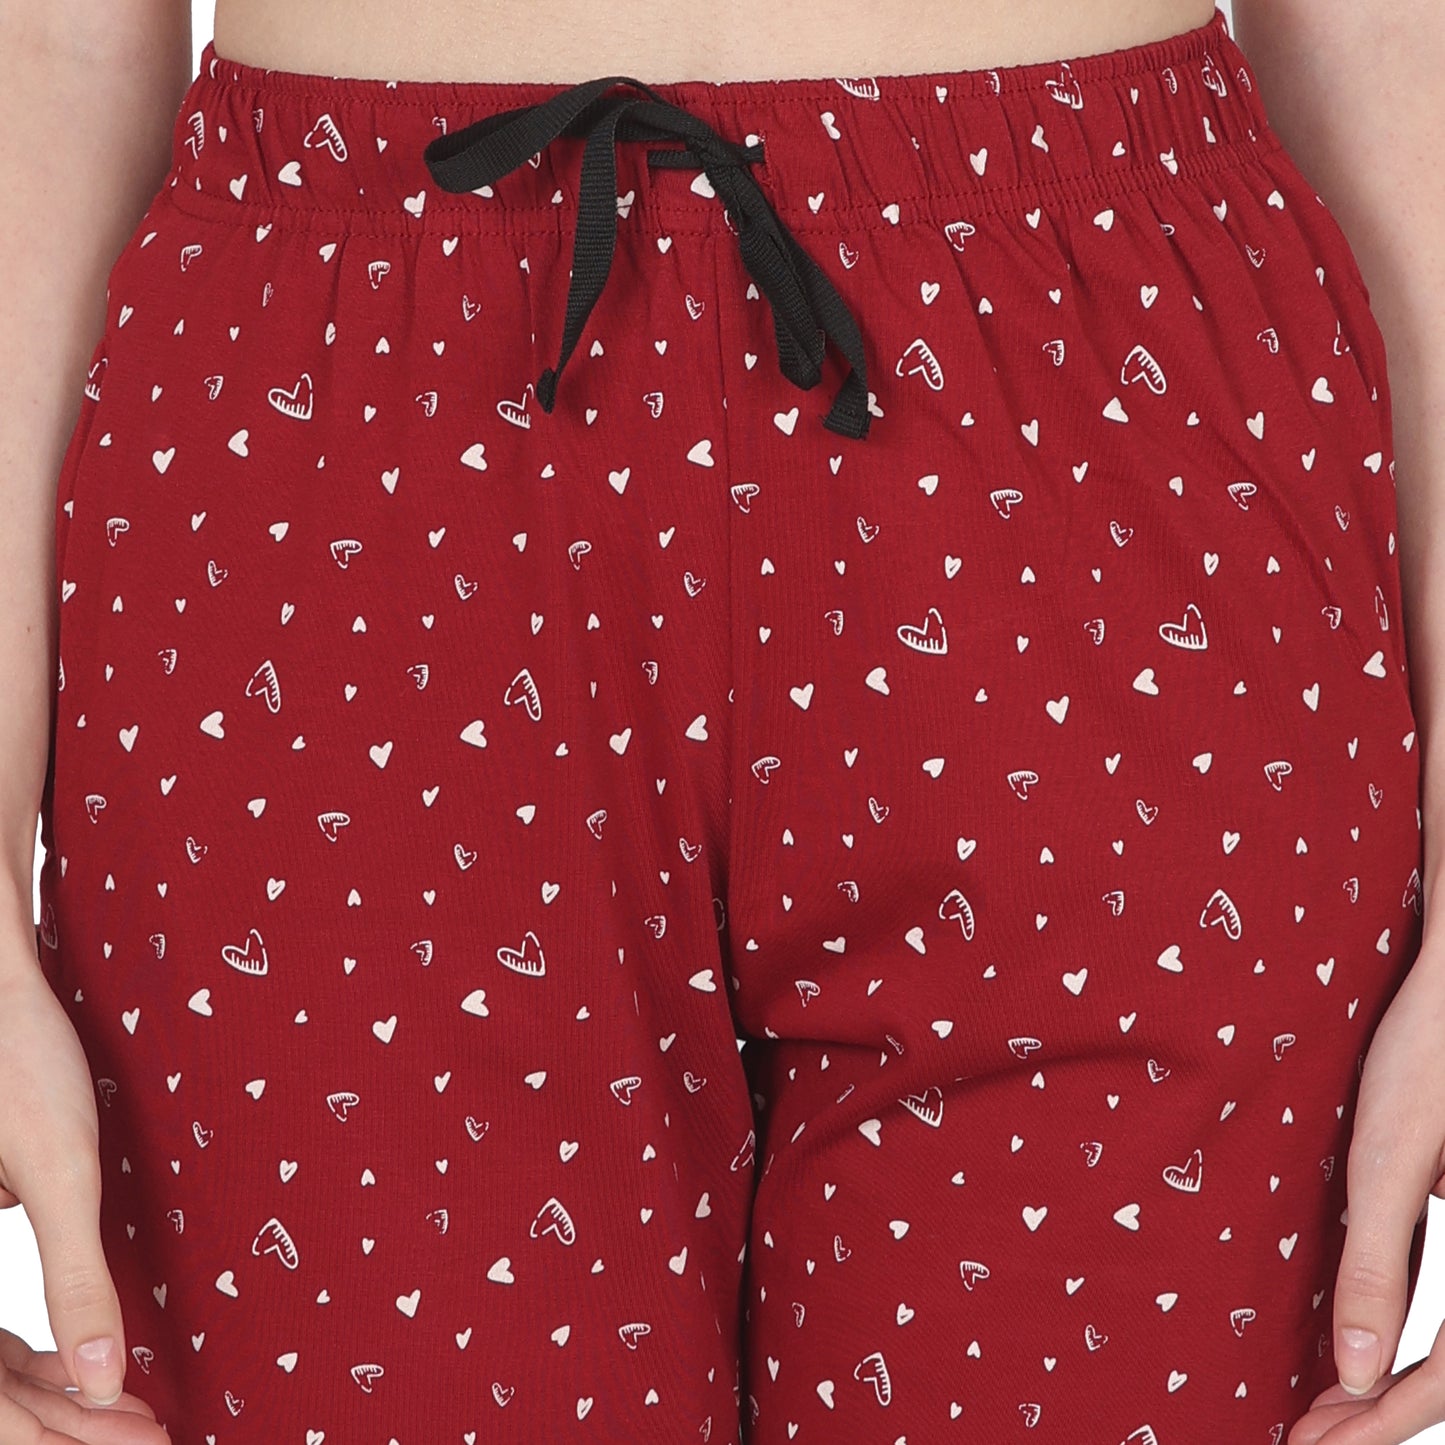 Eazy Women's Printed Capri Pants- Pack of 4 - Black, Cherry Red, Navy Blue & Steel Blue